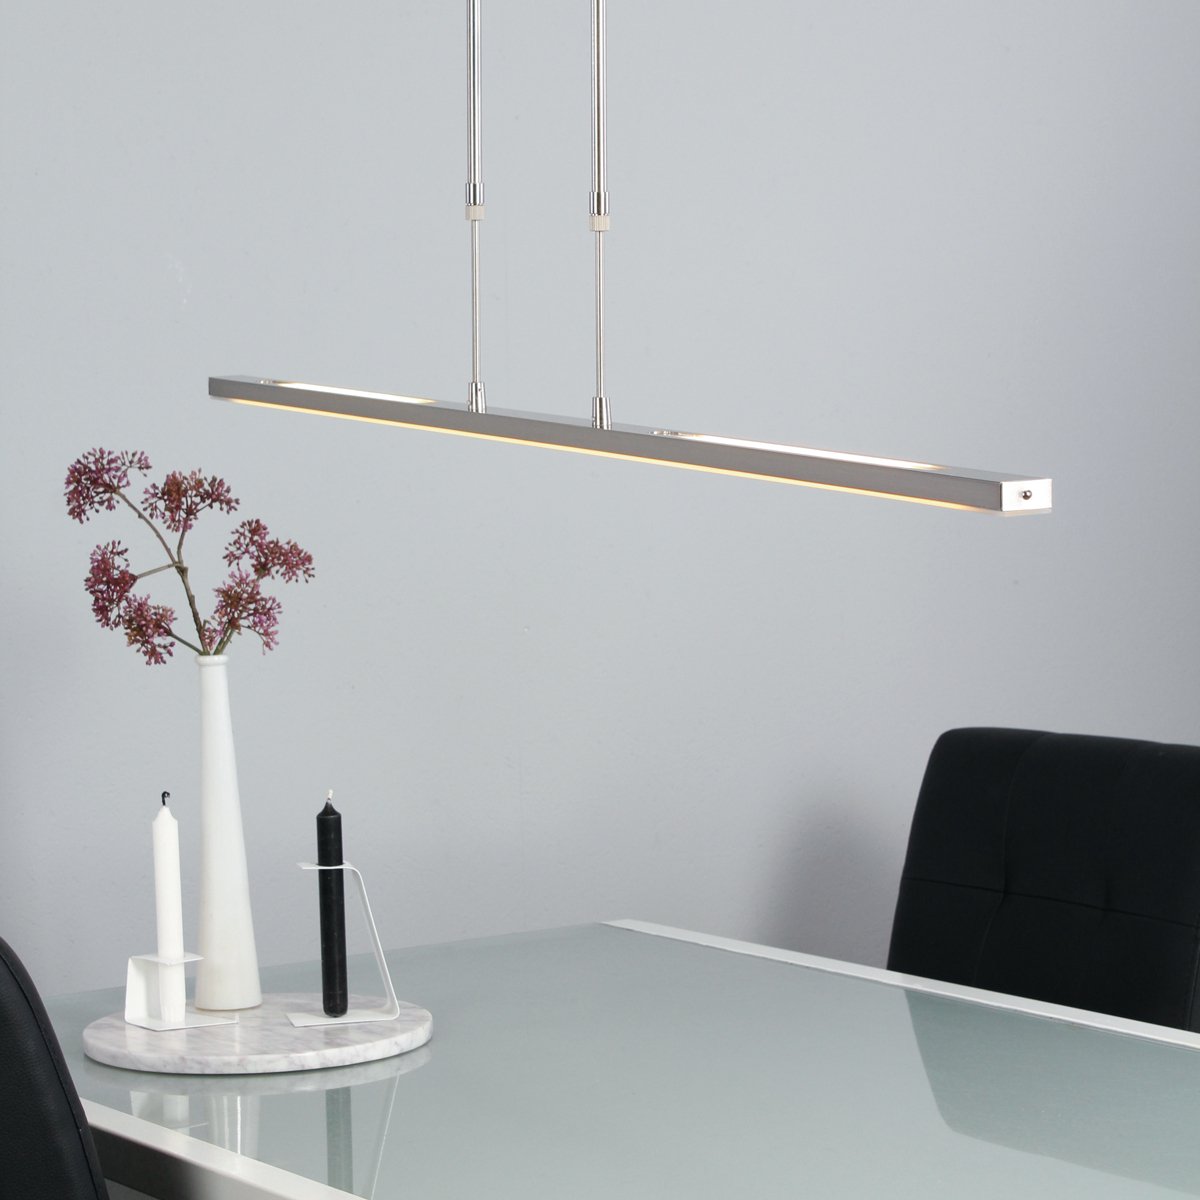 Hanglamp - Bussandri Limited - Modern - Kunststof - Modern - LED - L: 122cm - Voor Binnen - Woonkamer - Eetkamer - Zilver